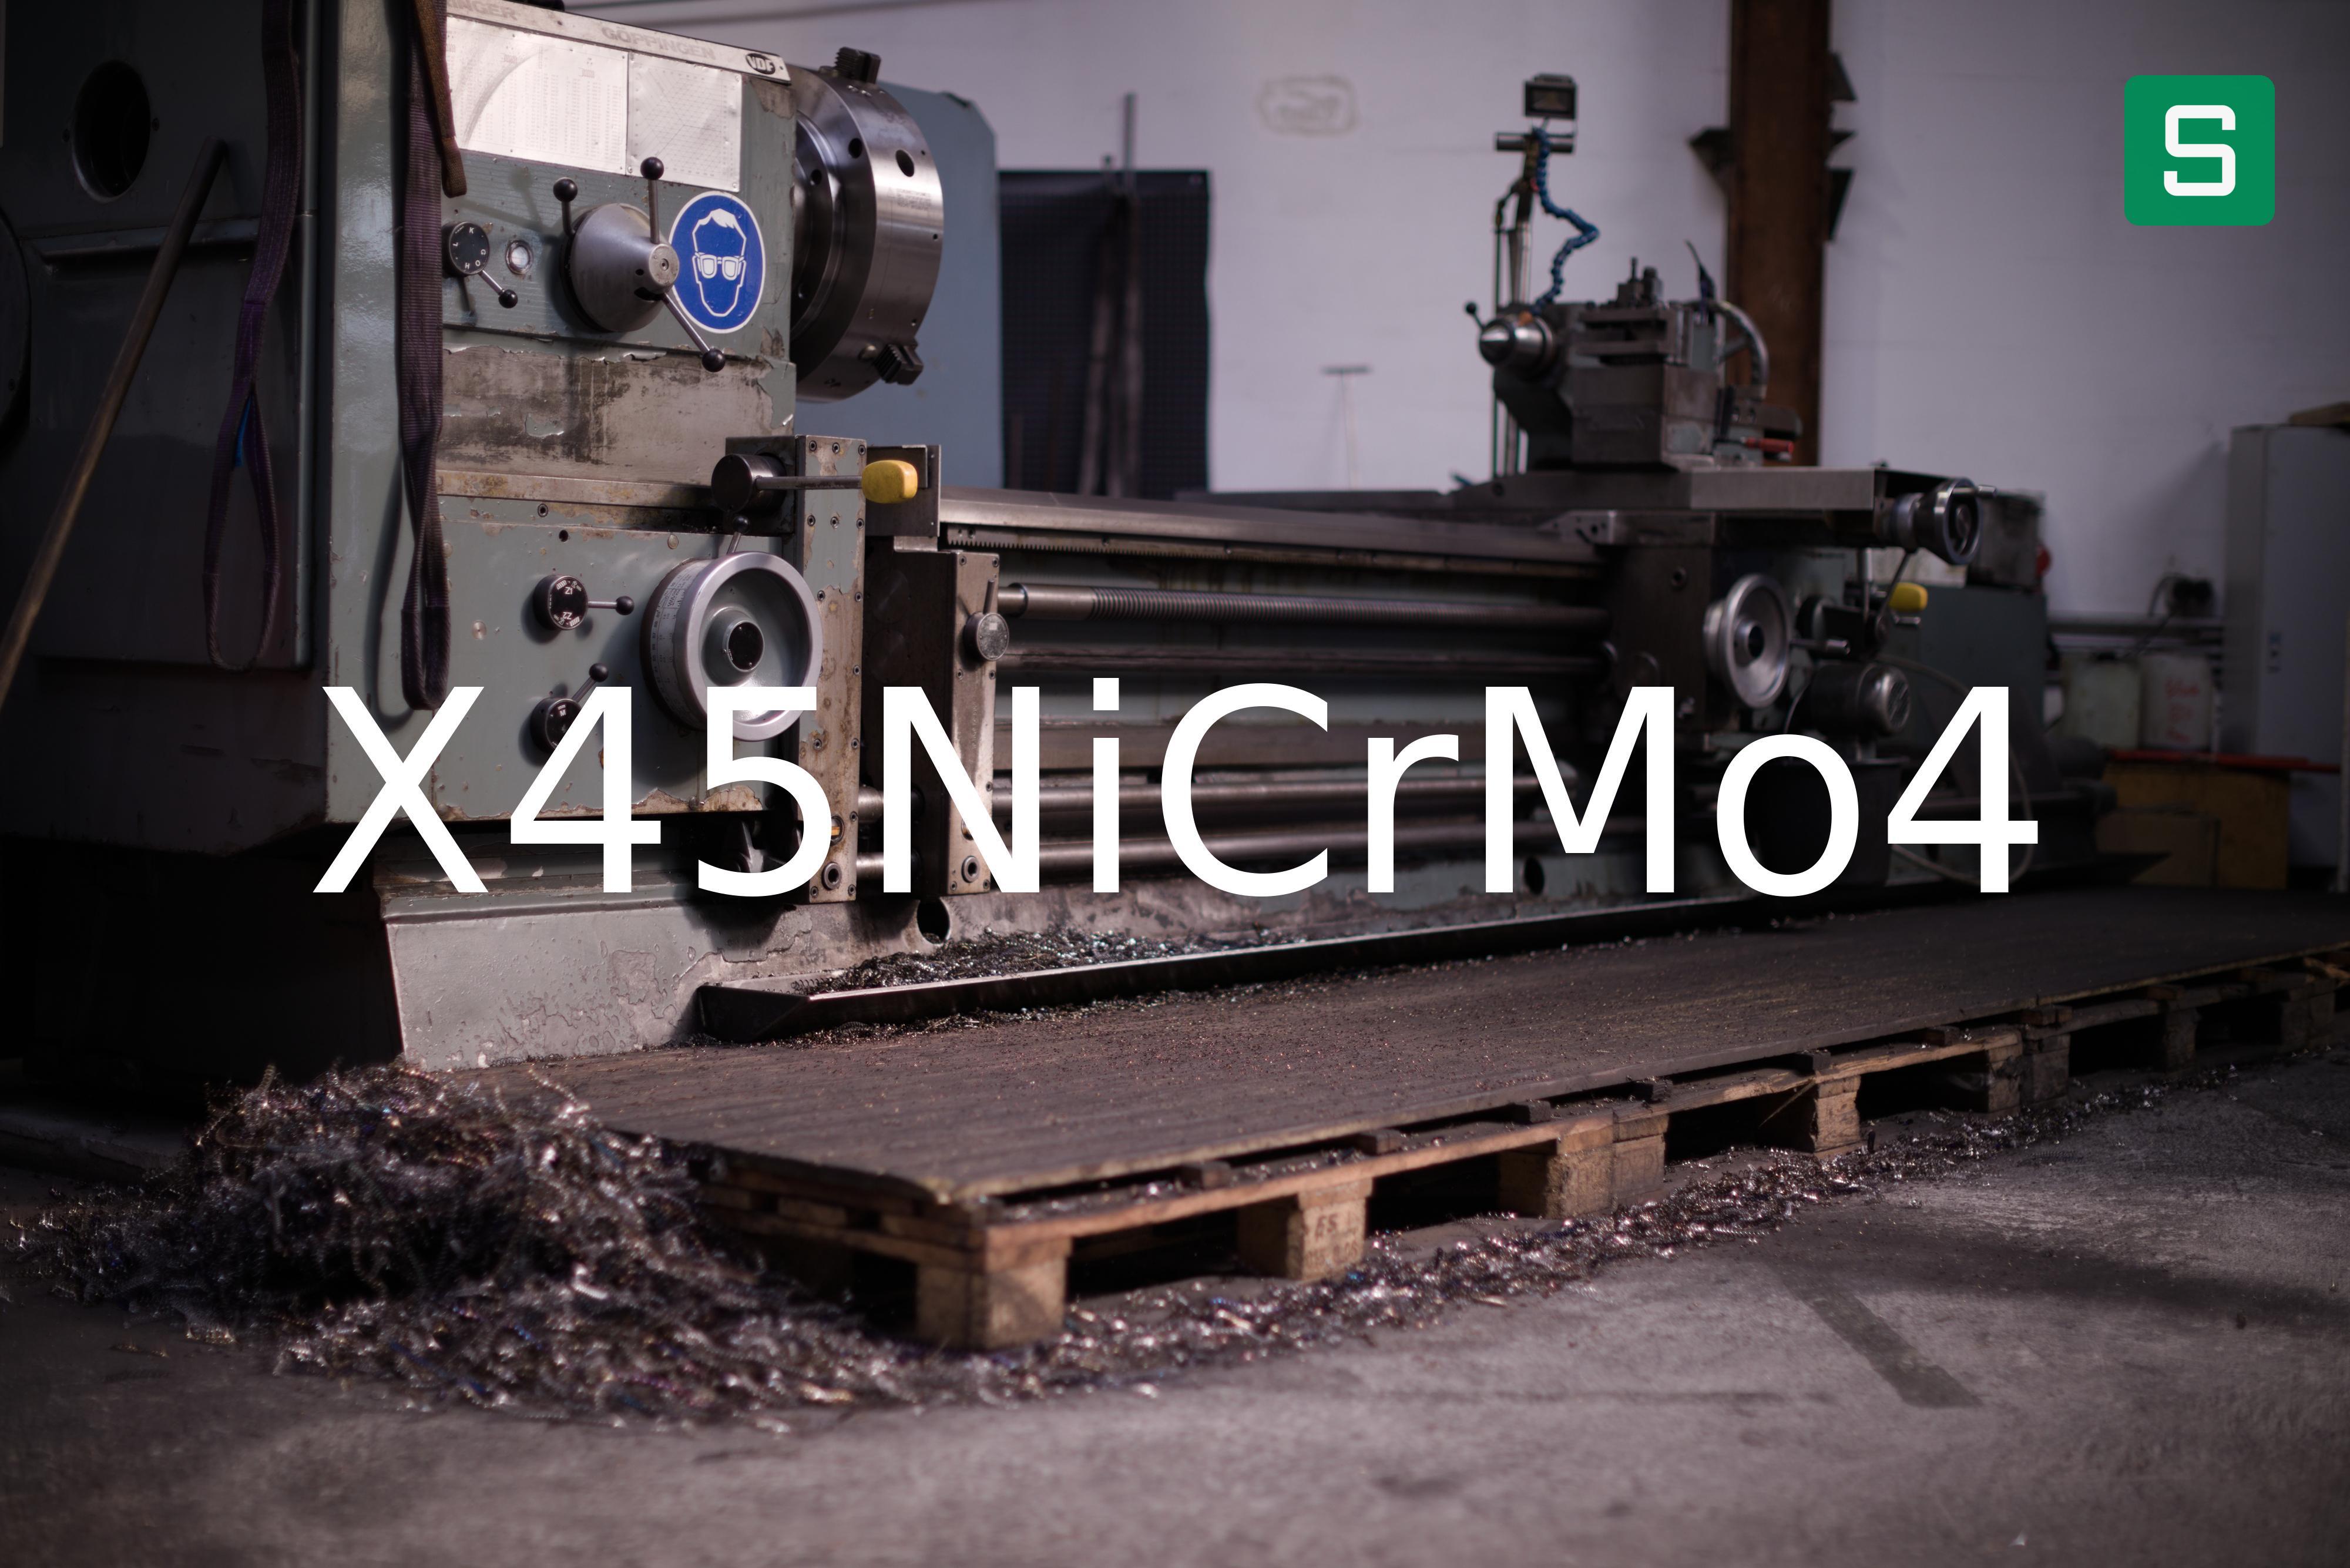 Steel Material: X45NiCrMo4